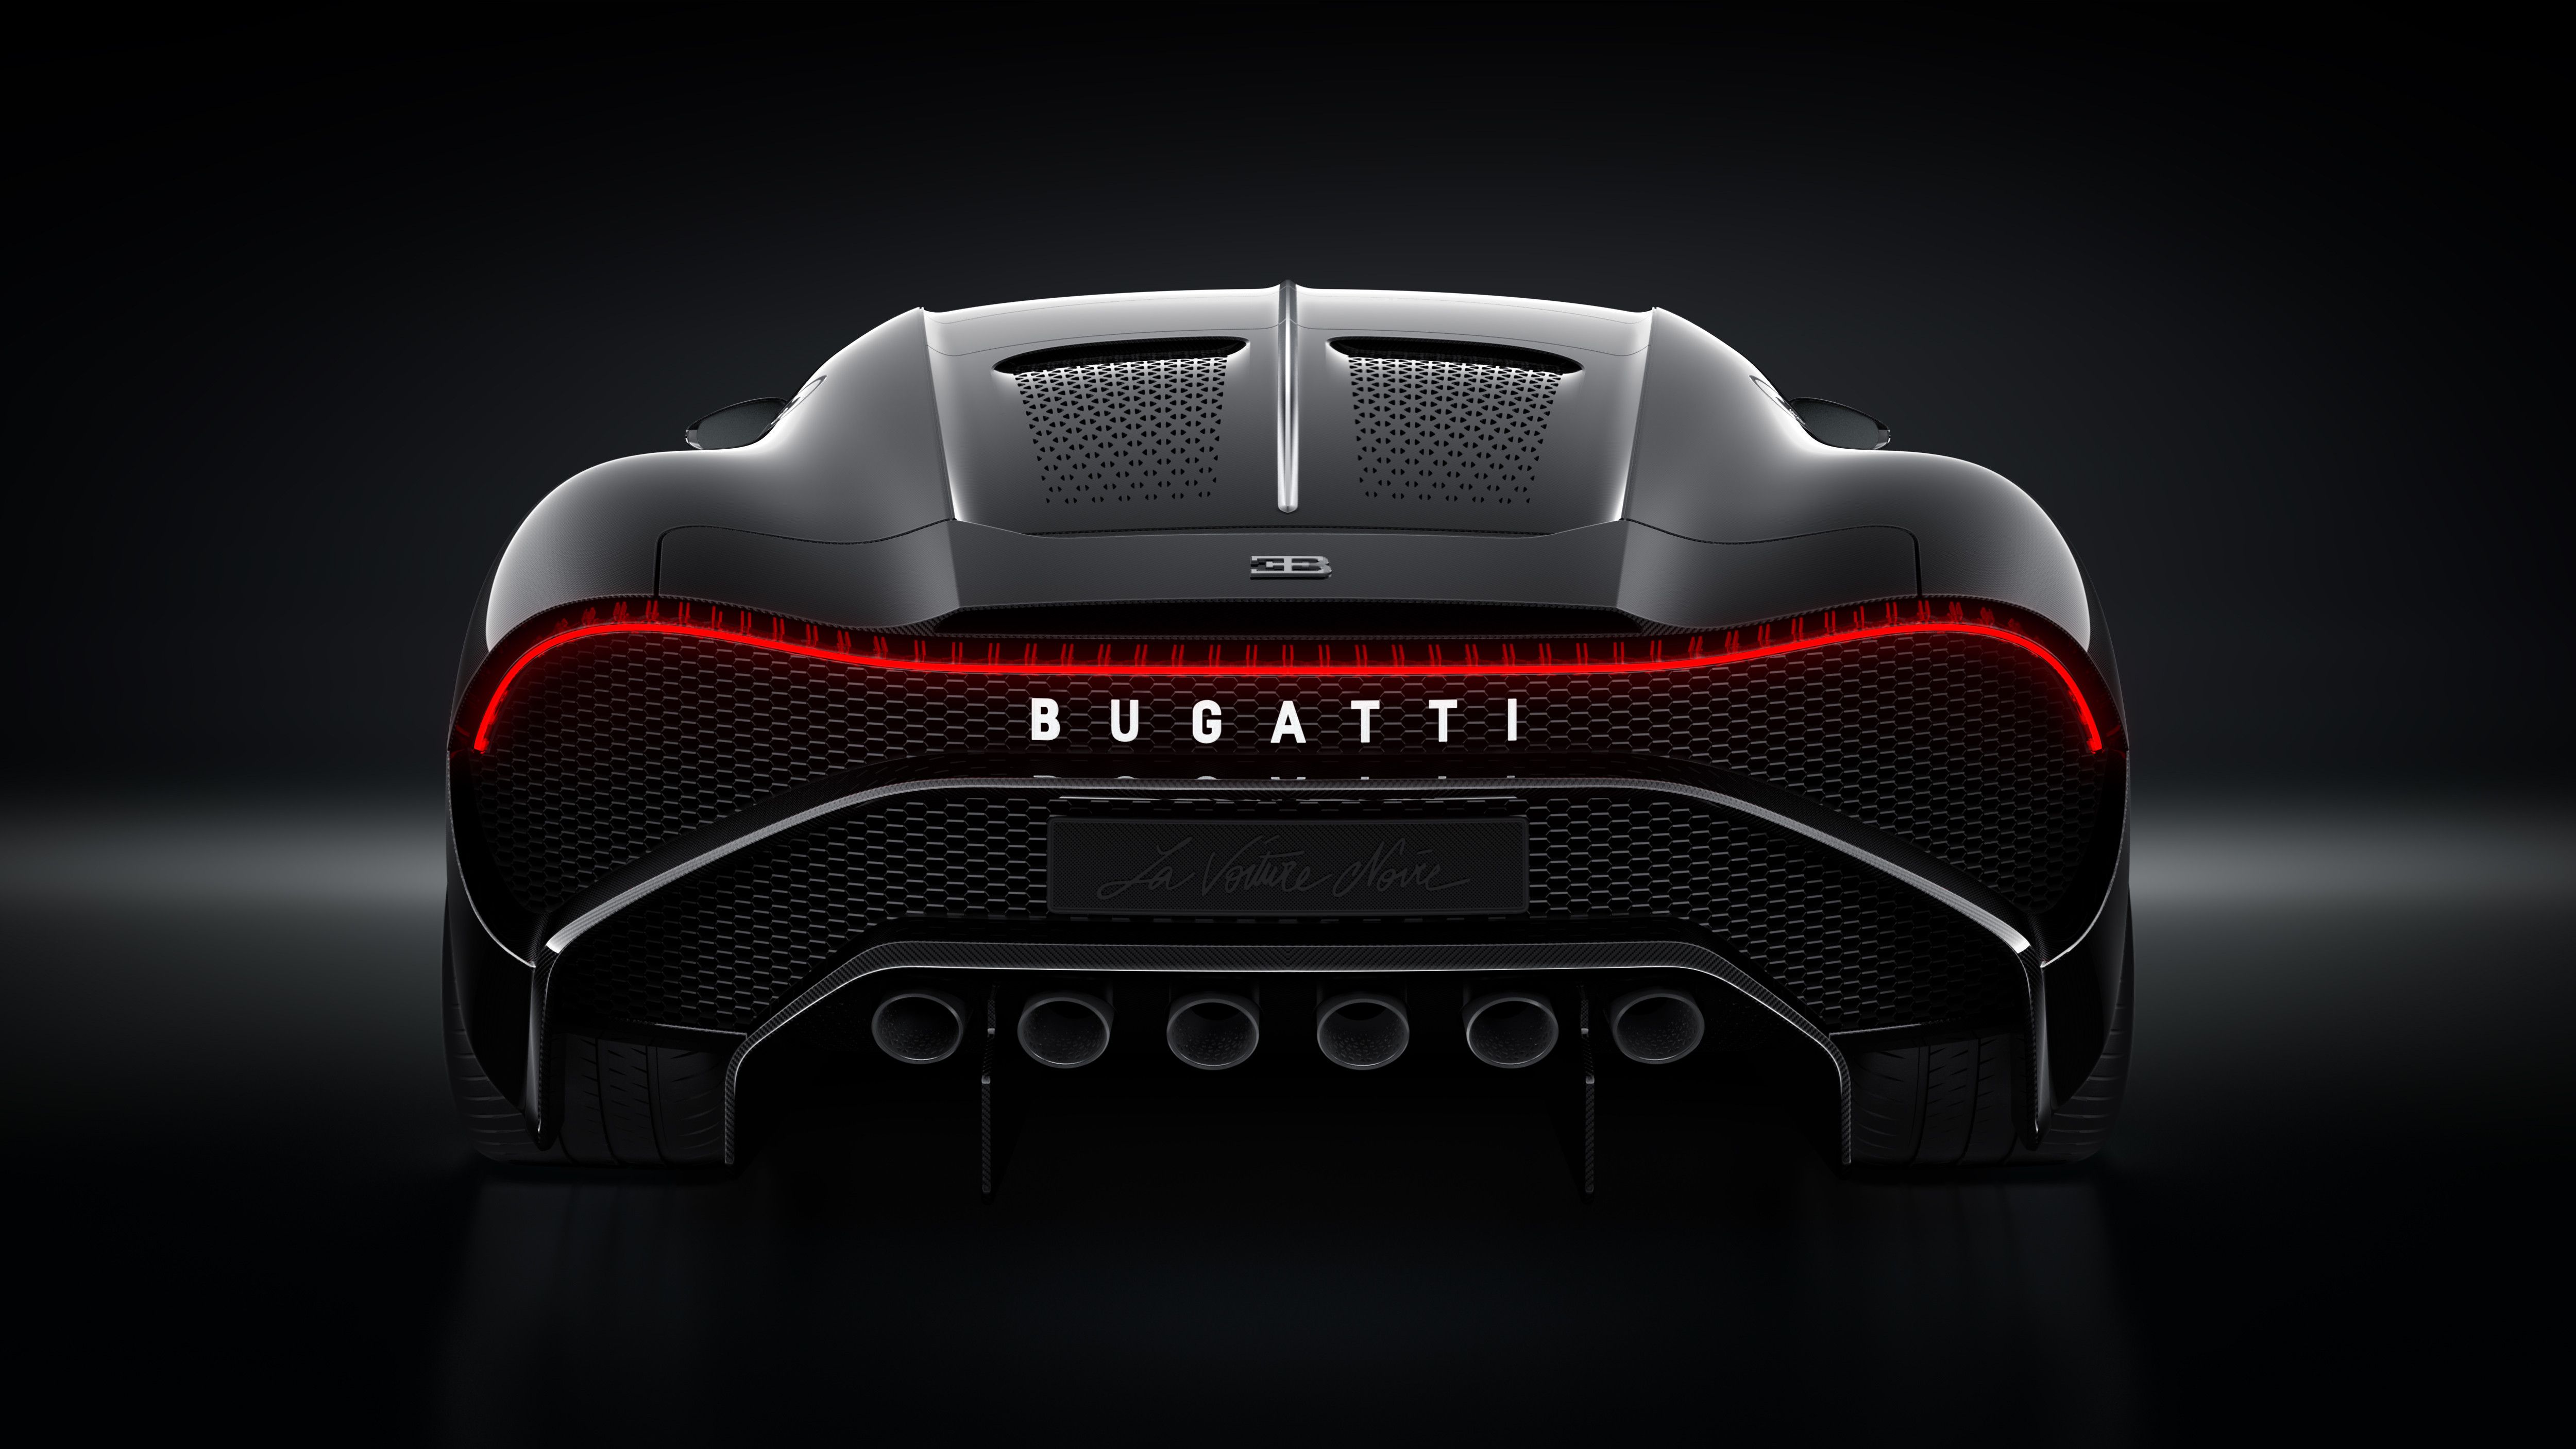 The Bugatti La Voiture Noire Tail Light.